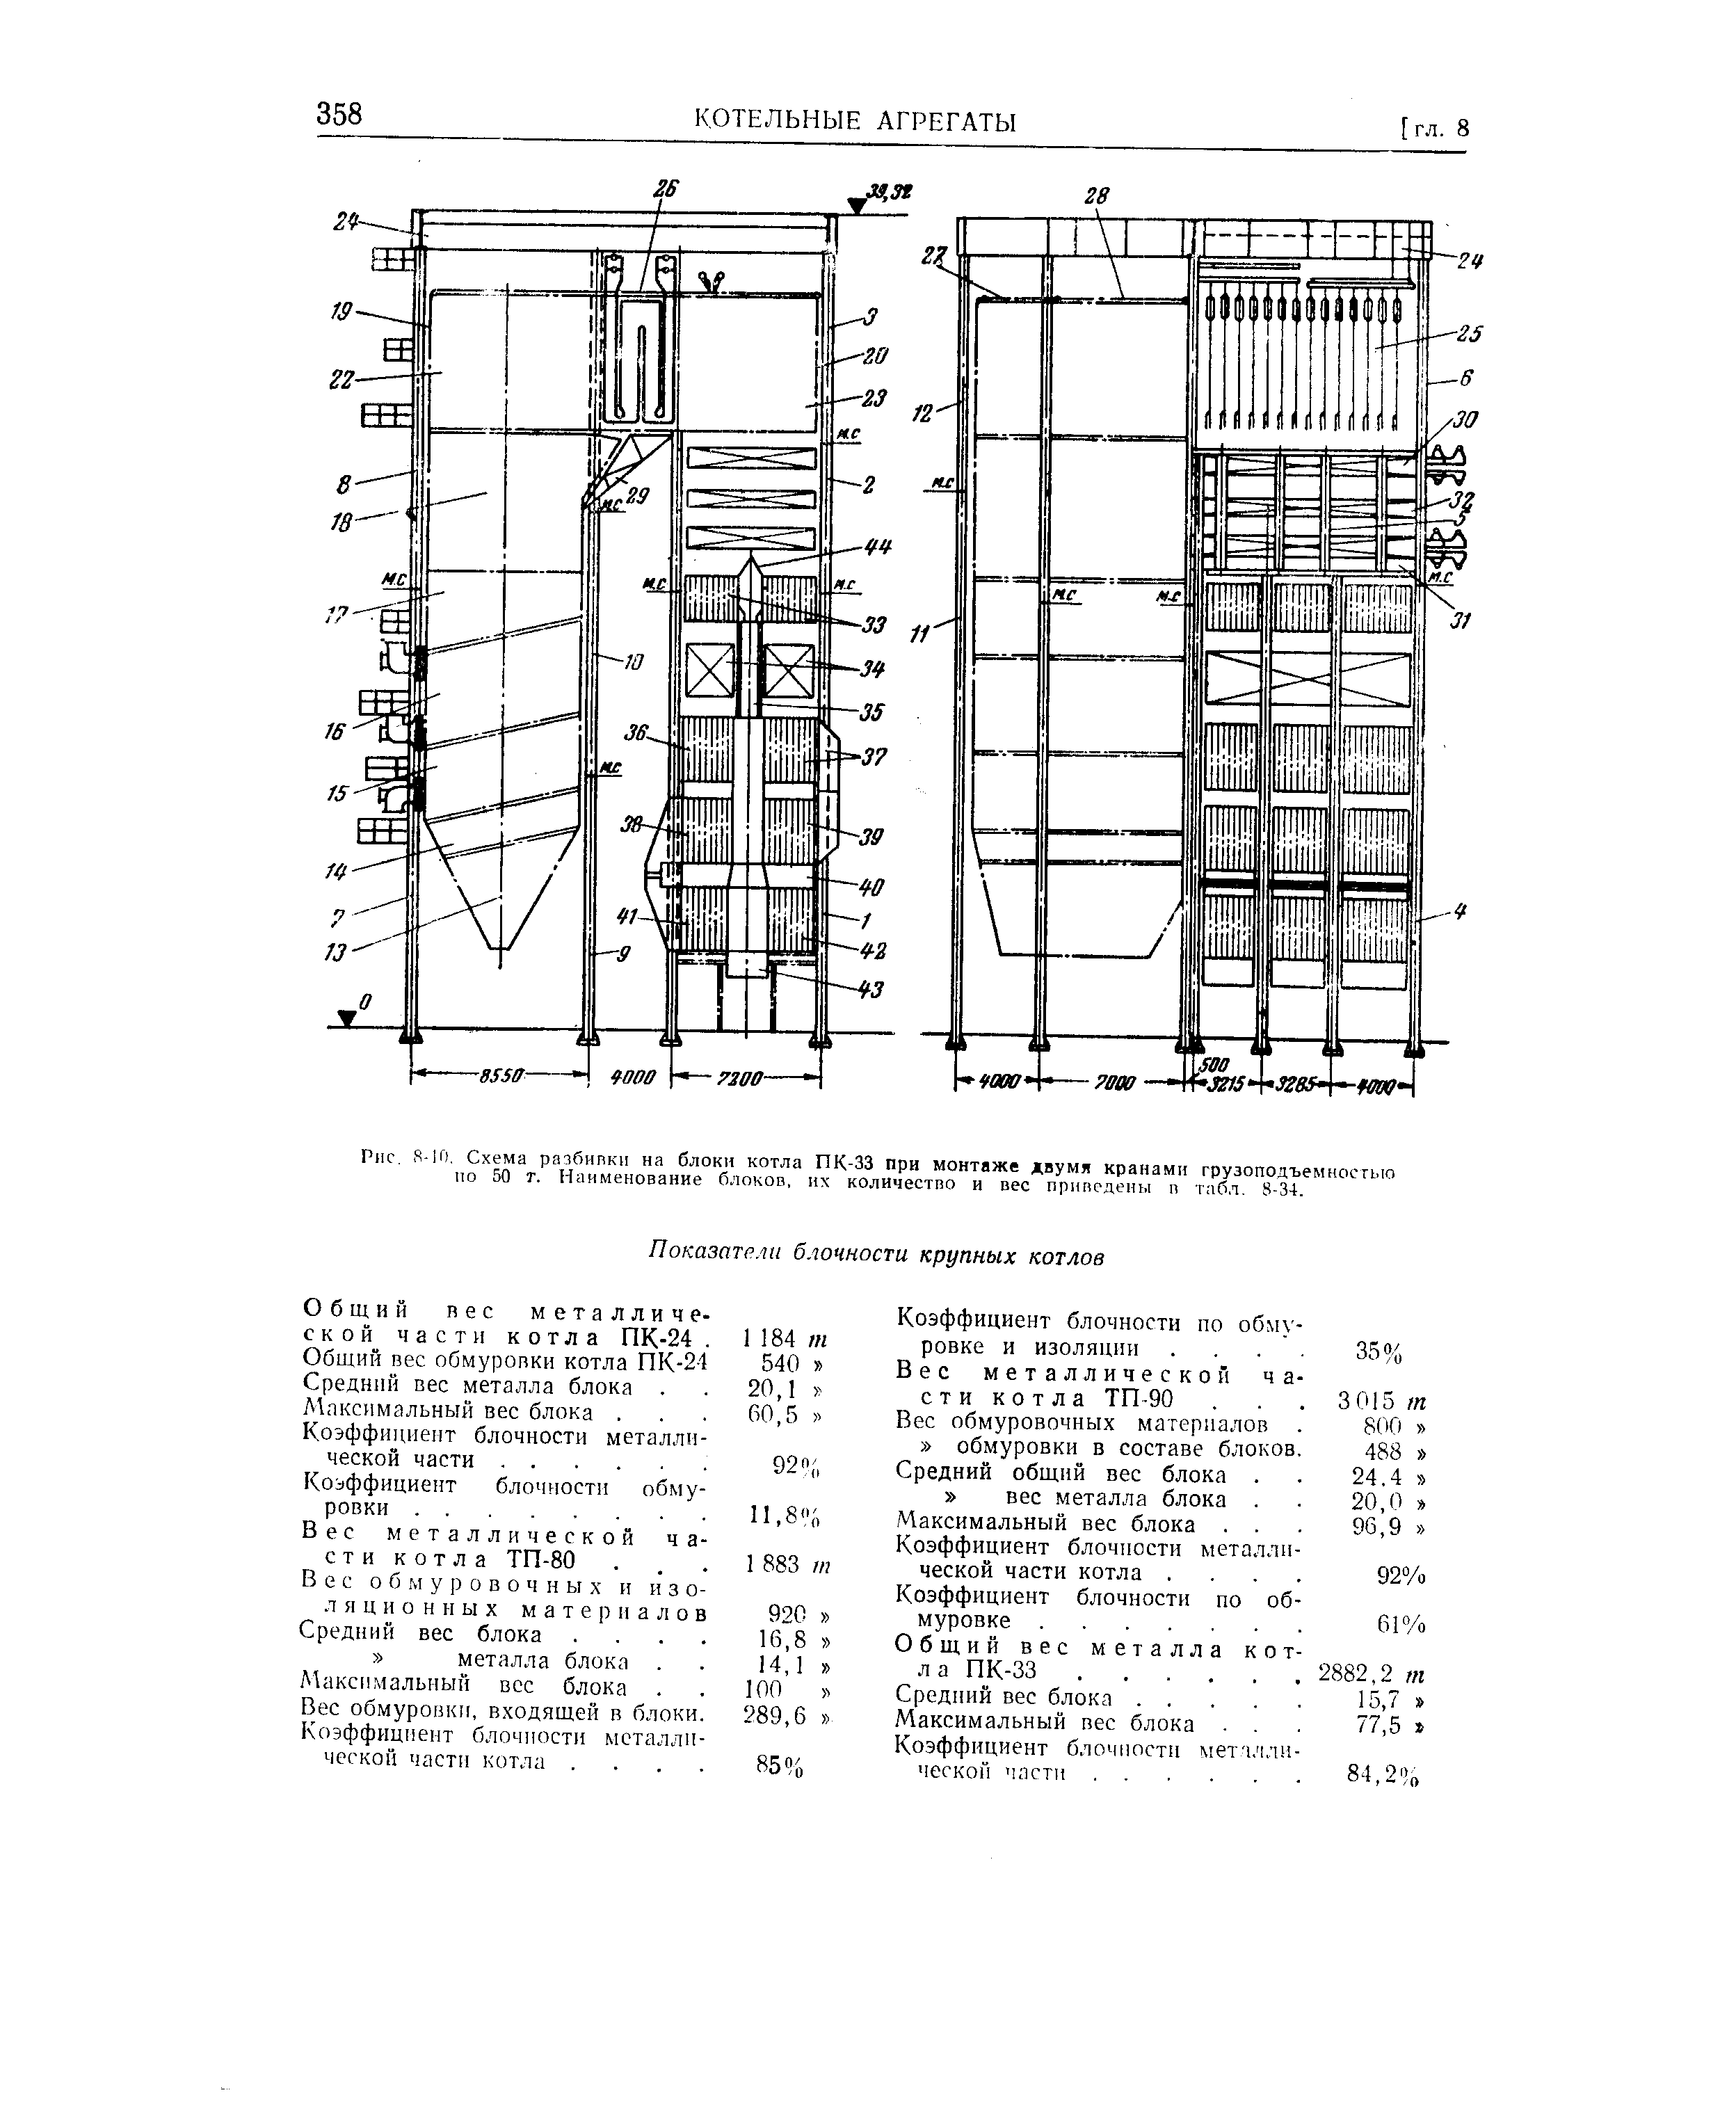 Рис. S-IO, Схема разбивки на блоки котла ПК-33 прн монтаже двумя <a href="/info/302948">кранами грузоподъемностью</a> ПО 50 т. Наименование блоков, нх количество и вес приведены п табл. 8-34.
